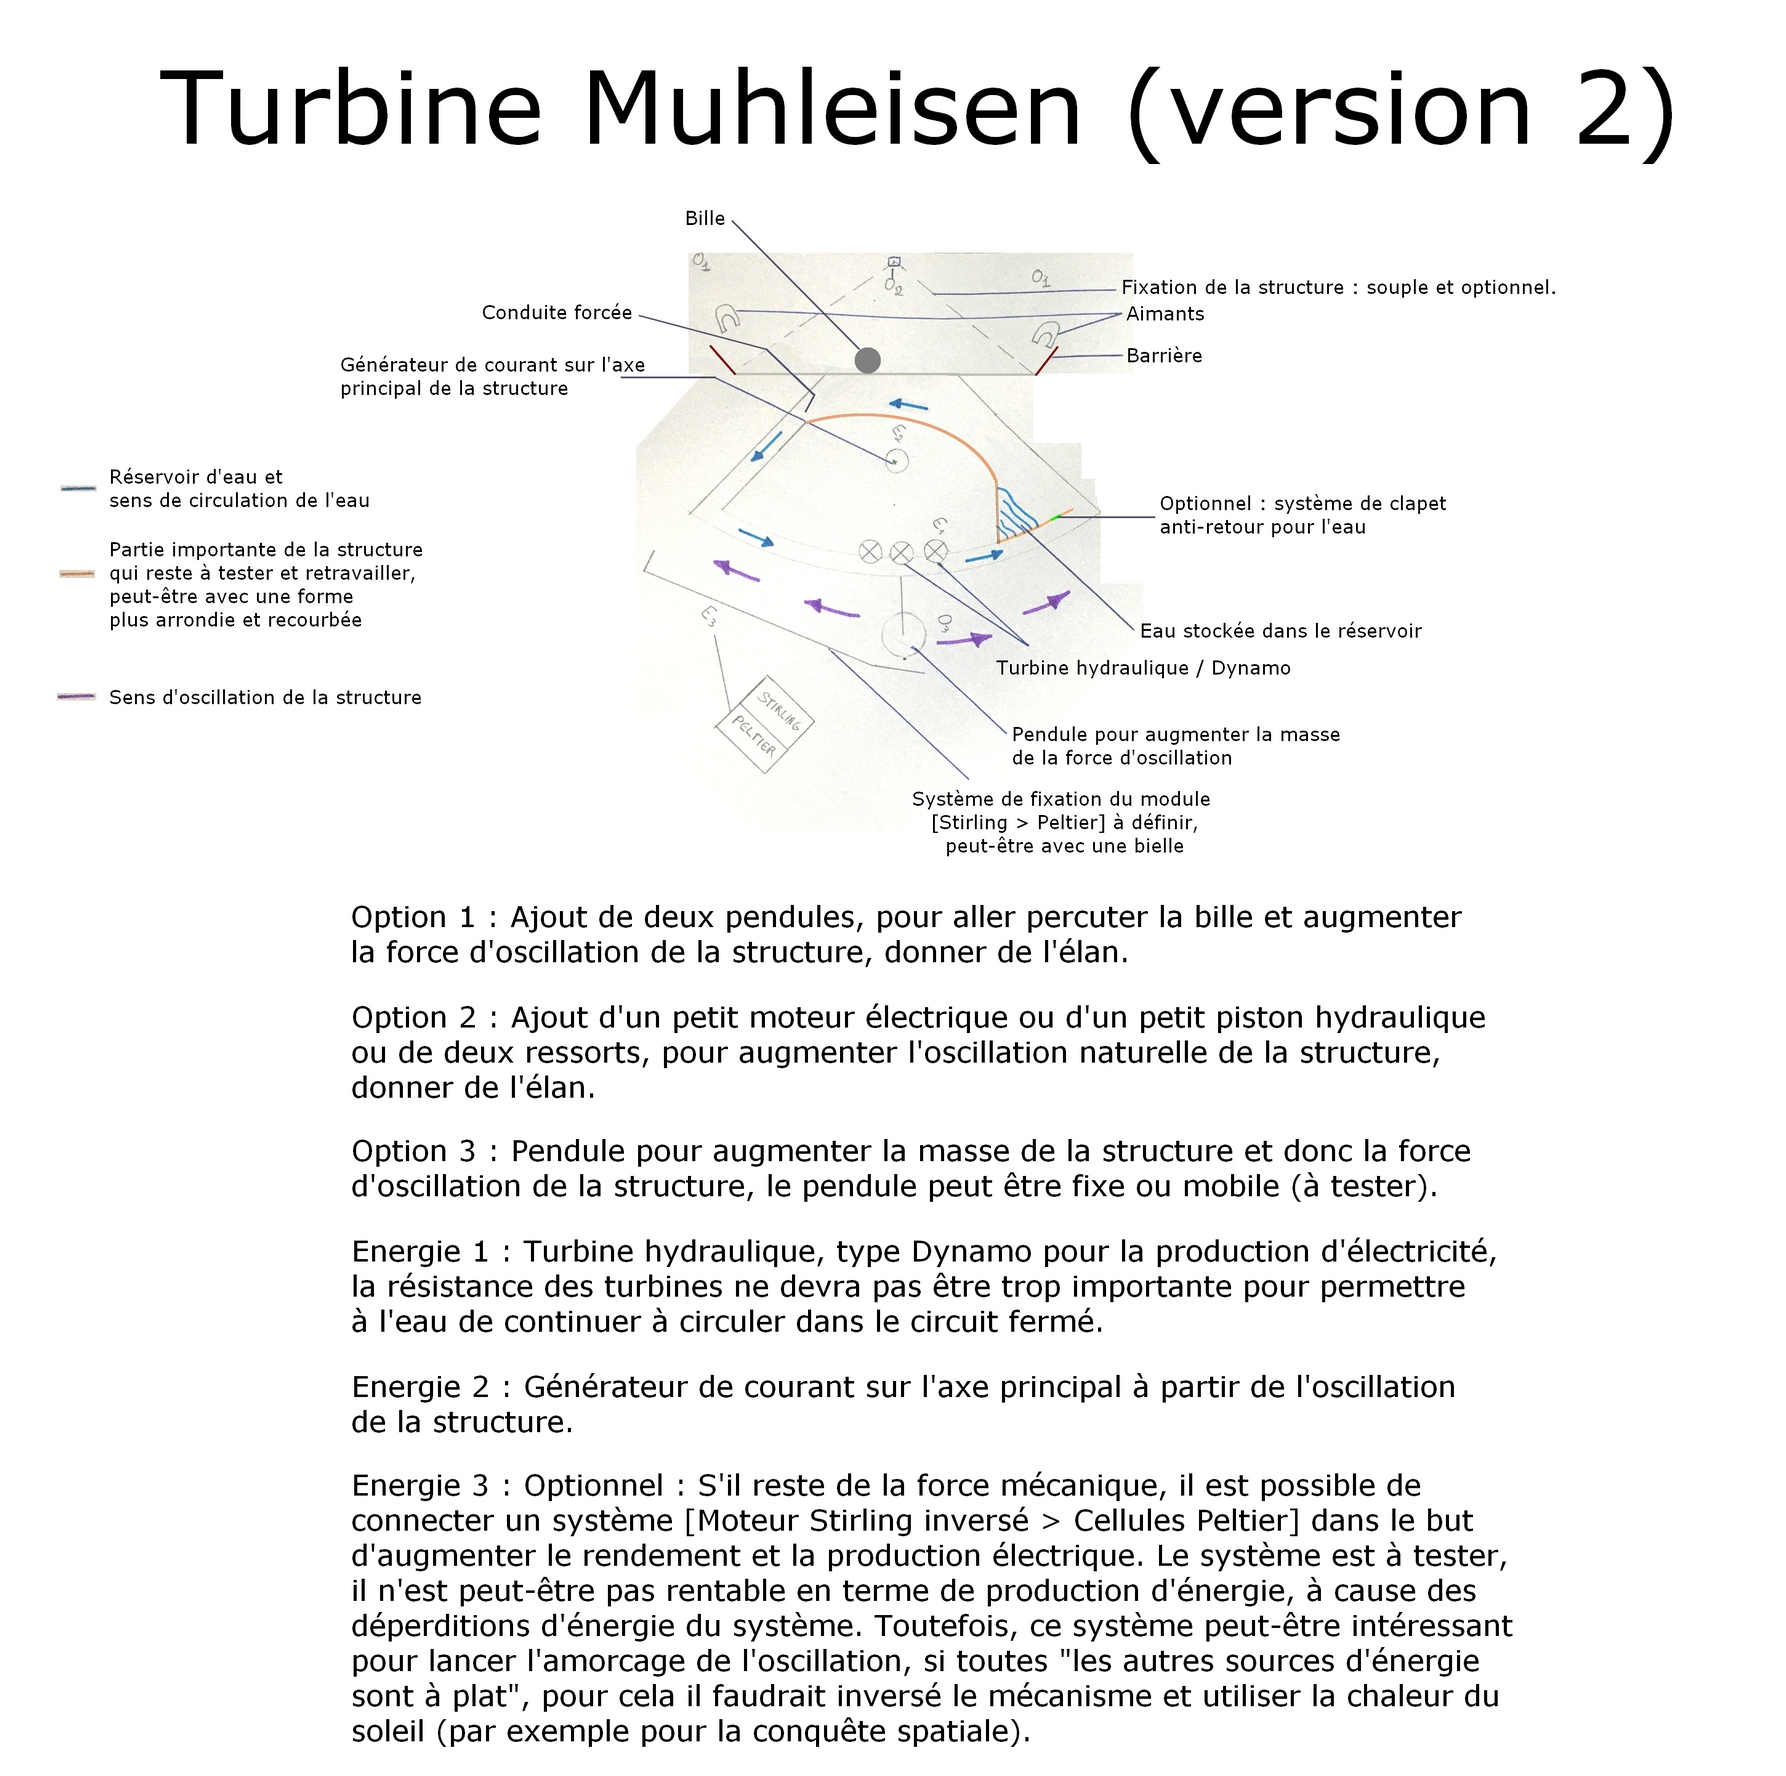 La Turbine Muhleisen deuxième version